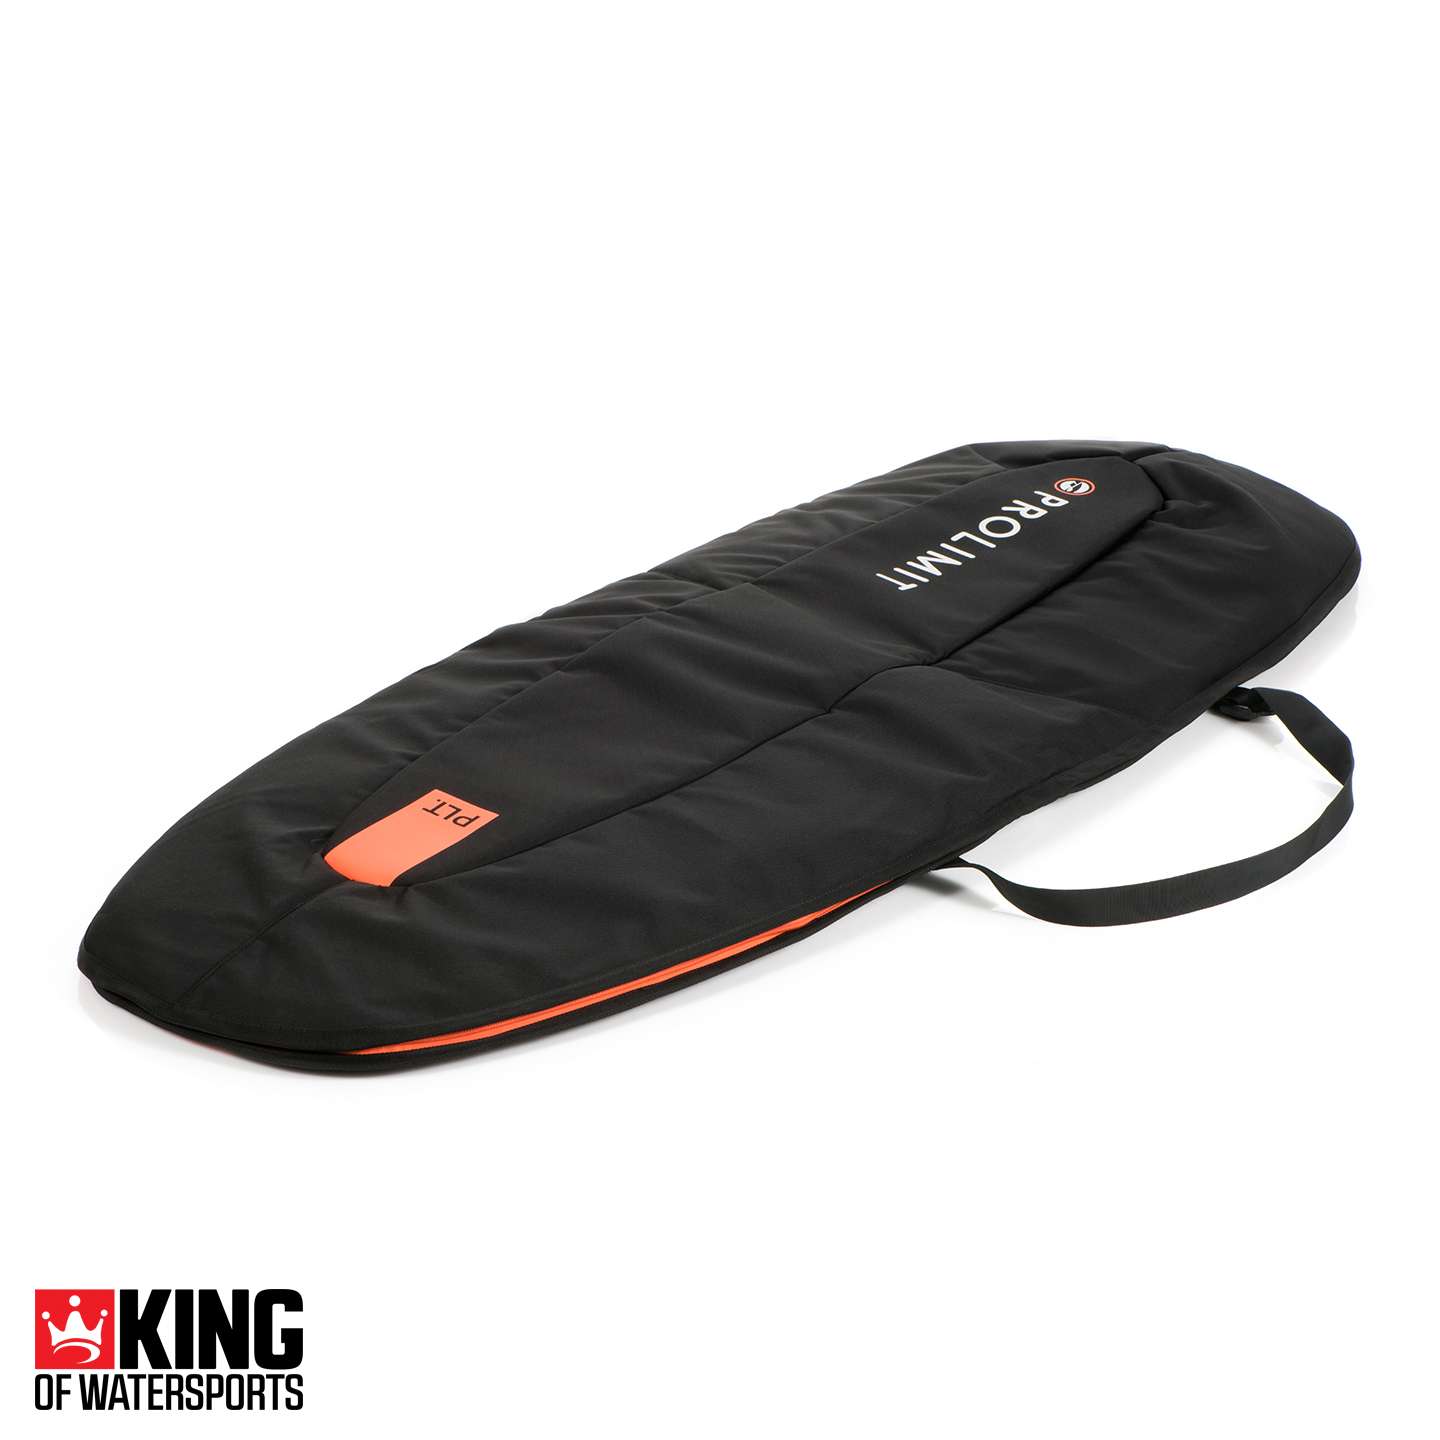 Prolimit hydro foil kitesurfing bag for board and foils padded travel bag 160cm